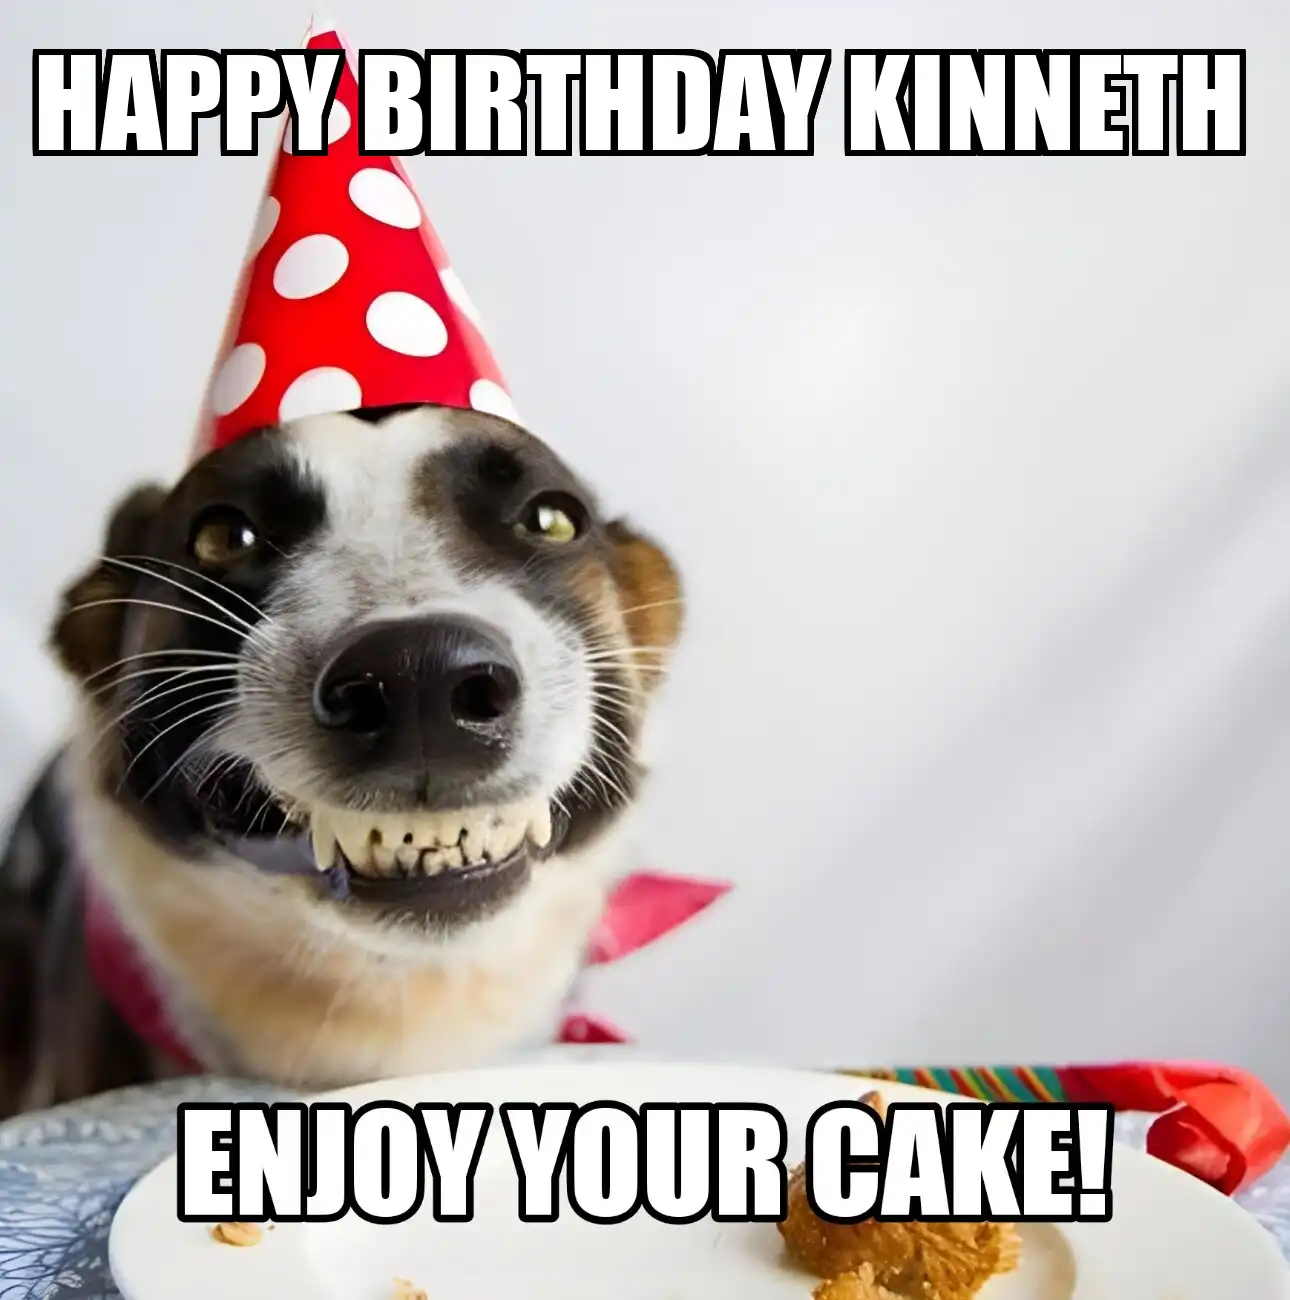 Happy Birthday Kinneth Enjoy Your Cake Dog Meme